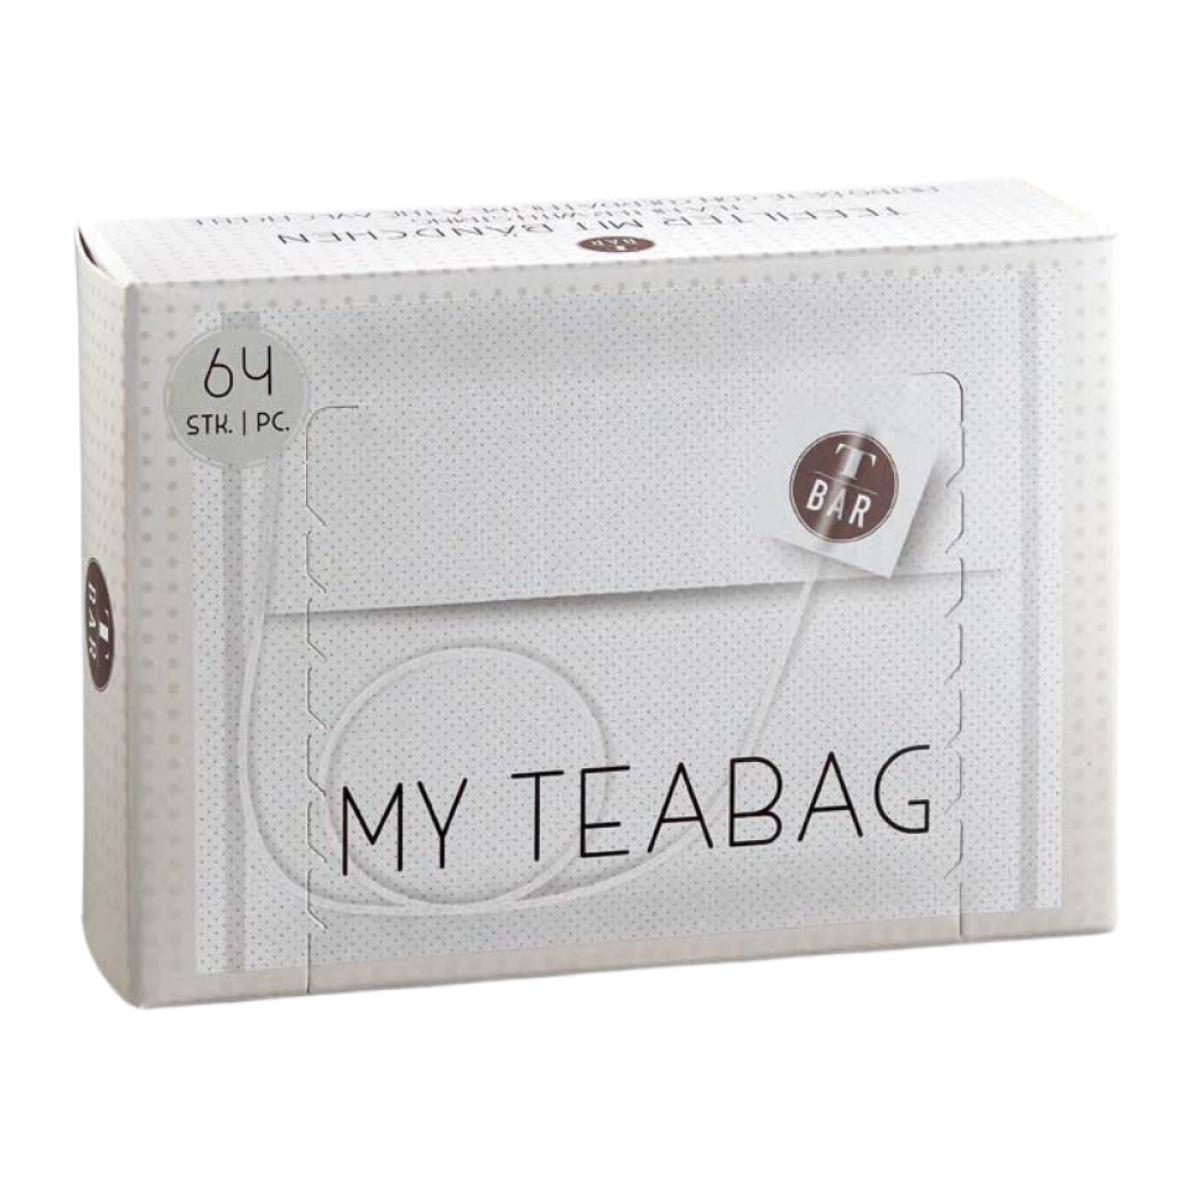 My tea bag 64 pcs